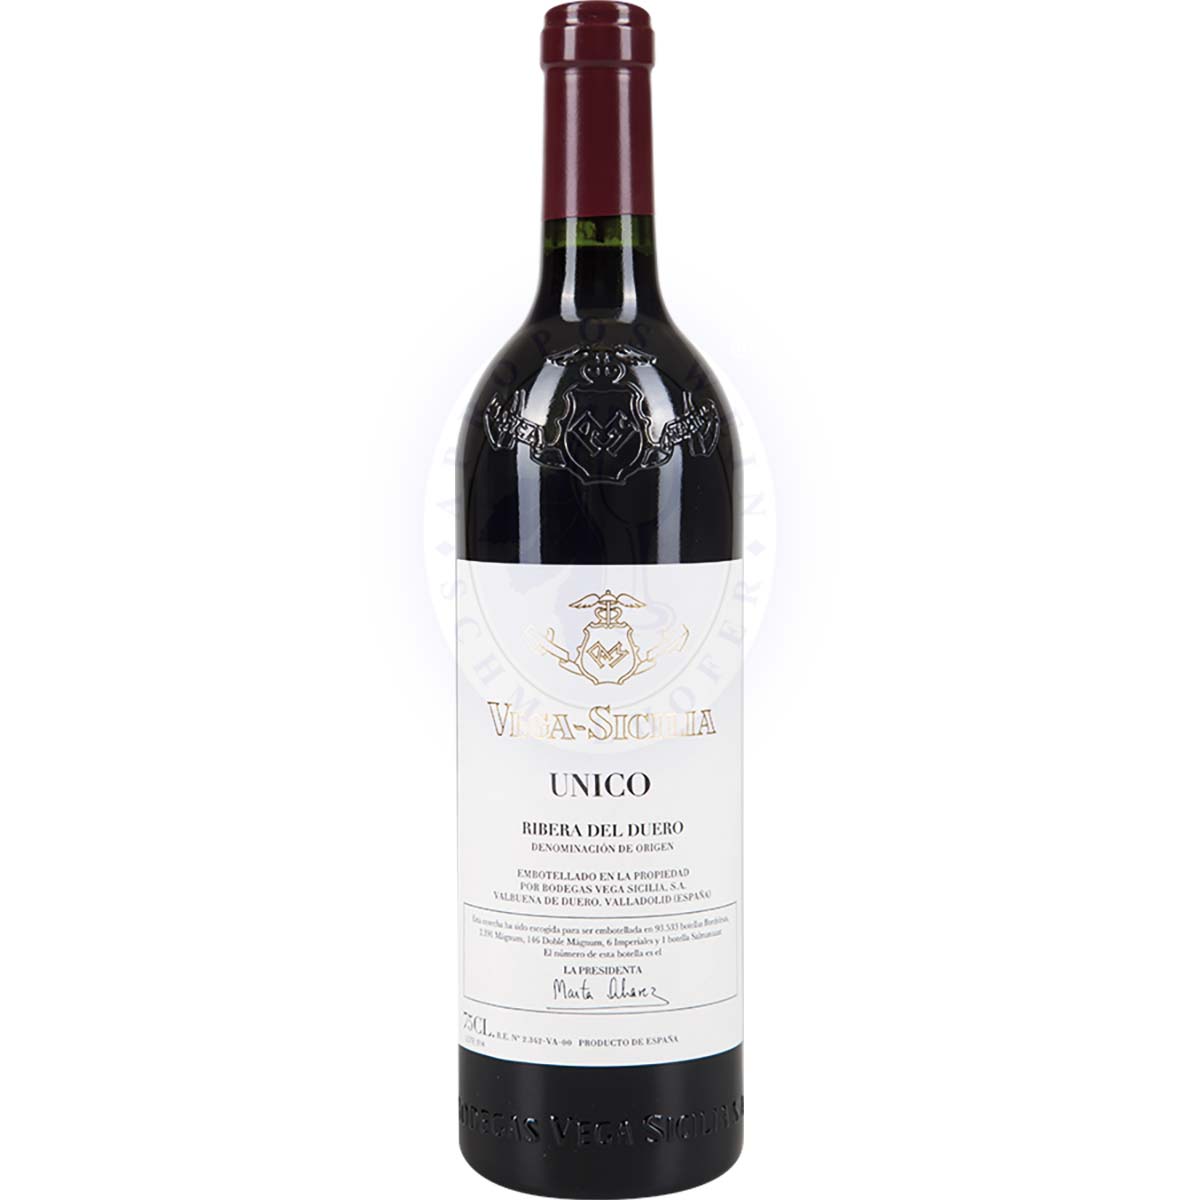 Unico Do 2014 Vega Sicilia 0,75l